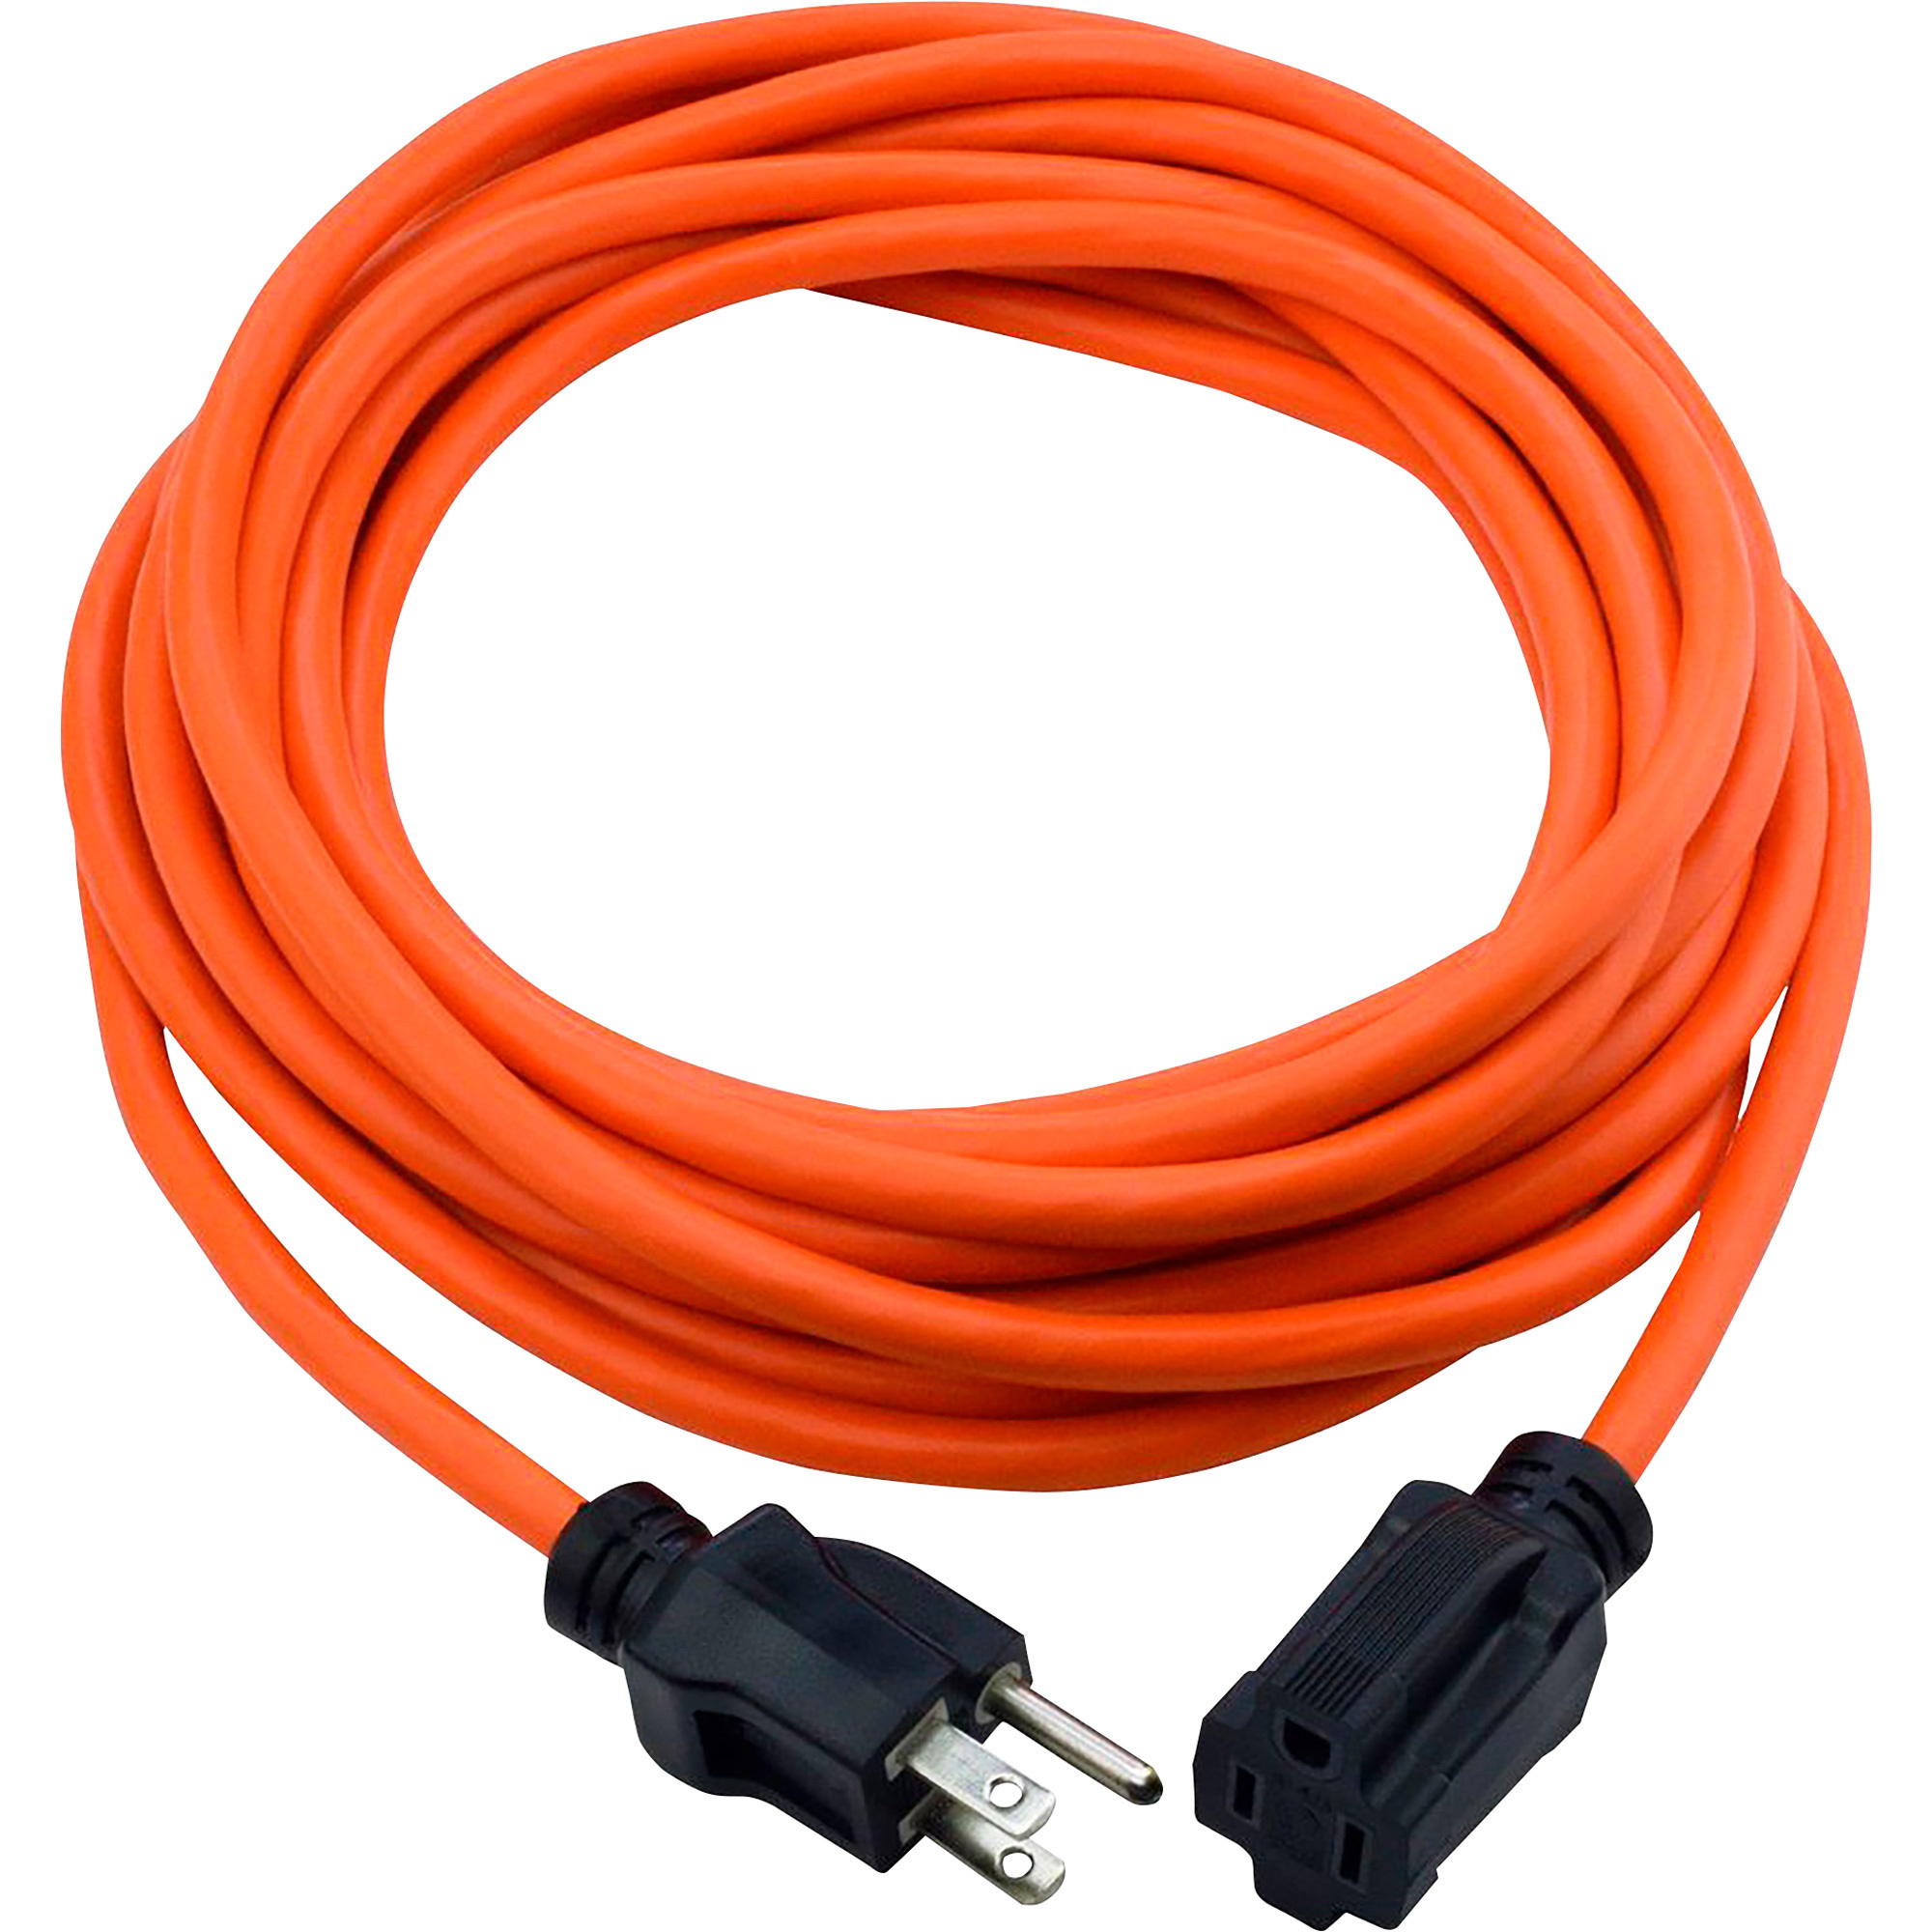 Prime Wire & Cable Outdoor Extension Cord, 25ft., 16/3 Gauge, 13 Amps,  Orange, Model# EC501625